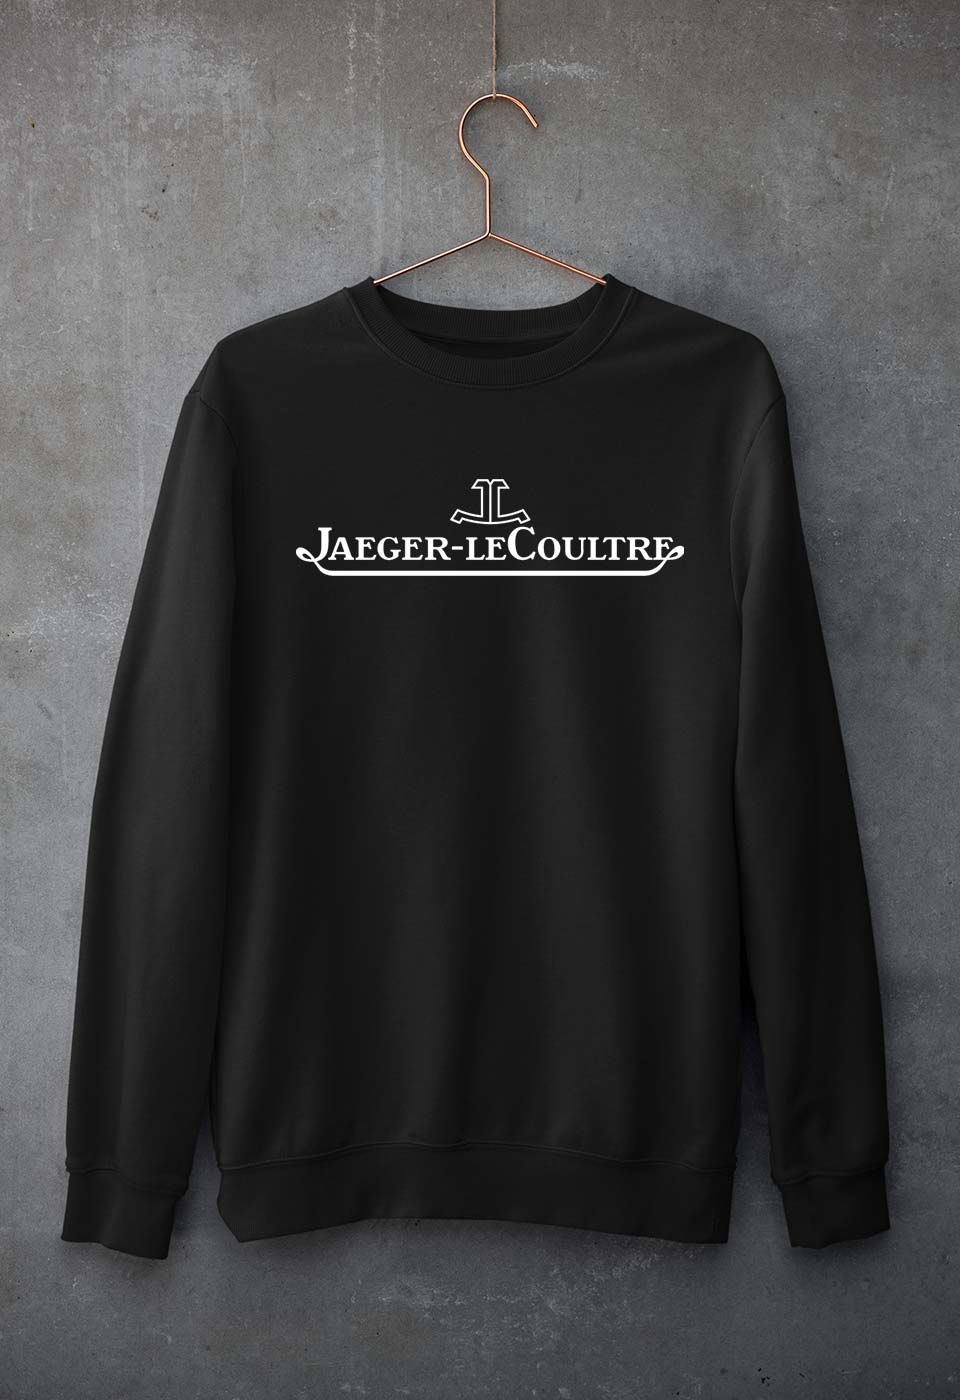 Jaeger-LeCoultre Unisex Sweatshirt for Men/Women-S(40 Inches)-Black-Ektarfa.online